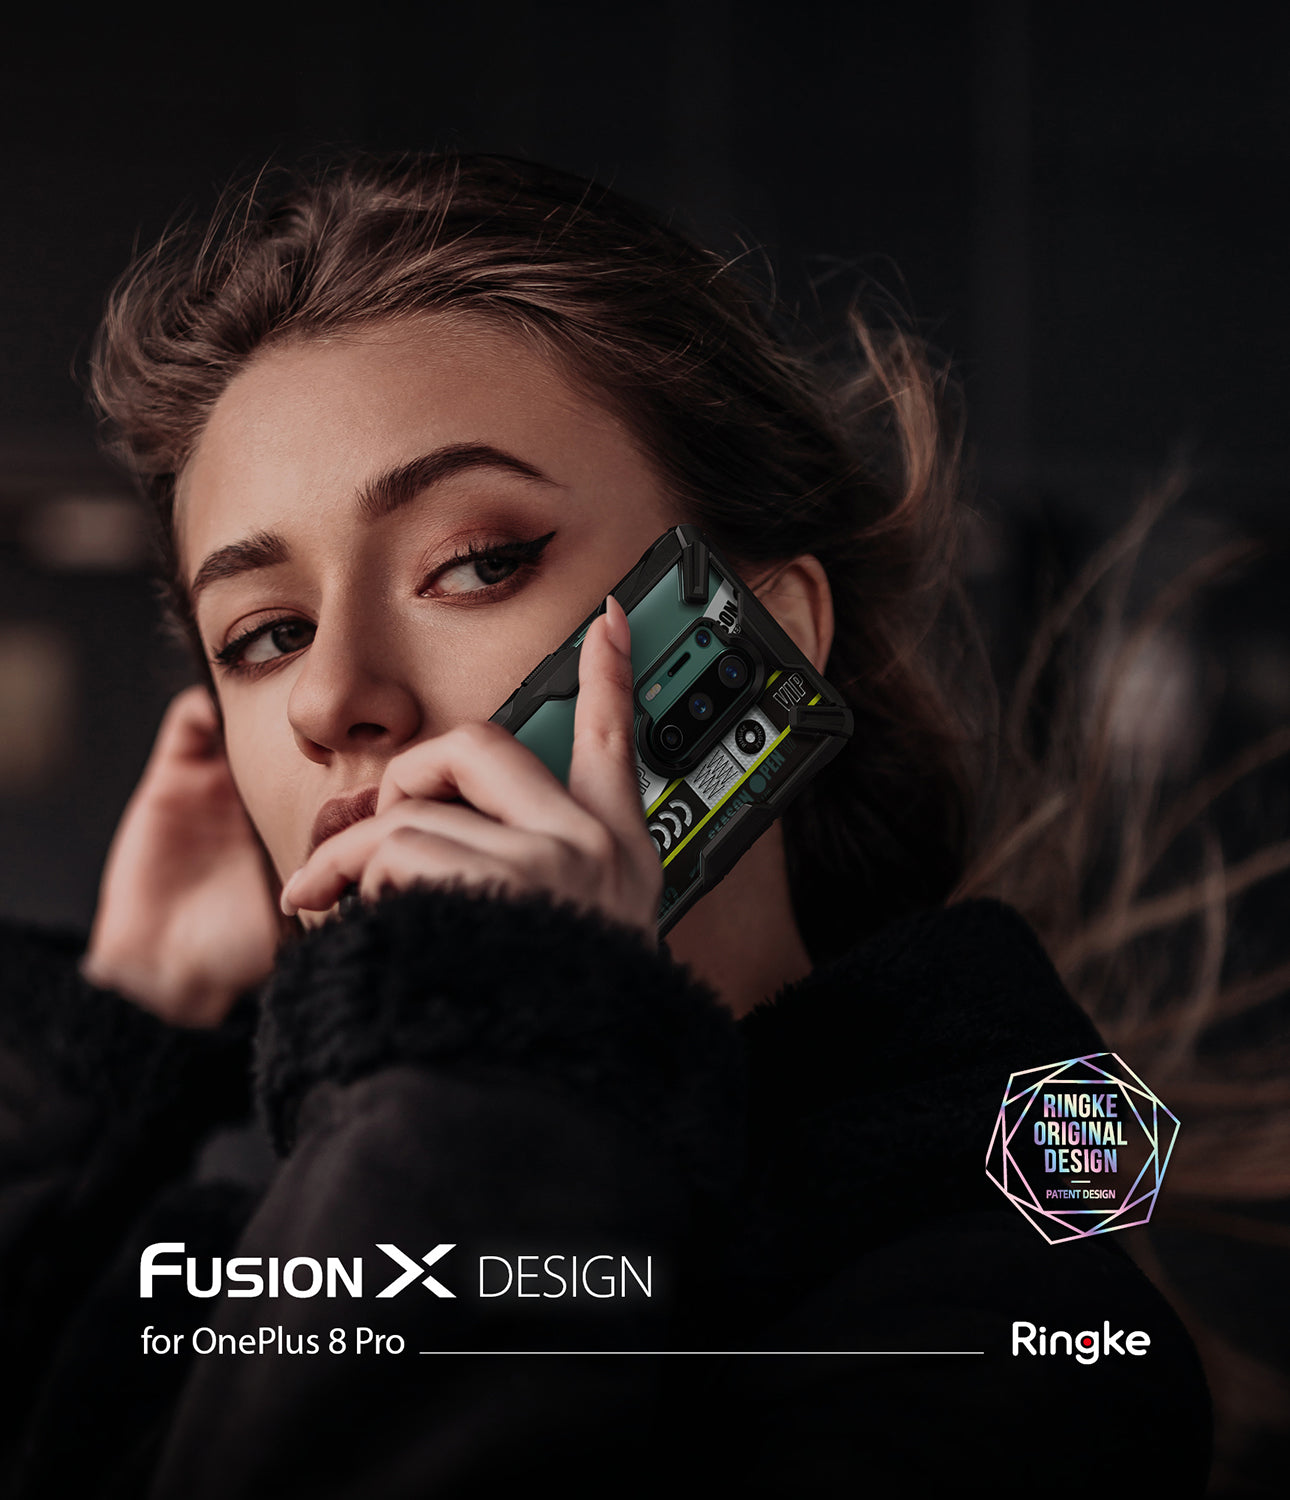 oneplus 8 pro case - ringke fusion x design 01 ticket band